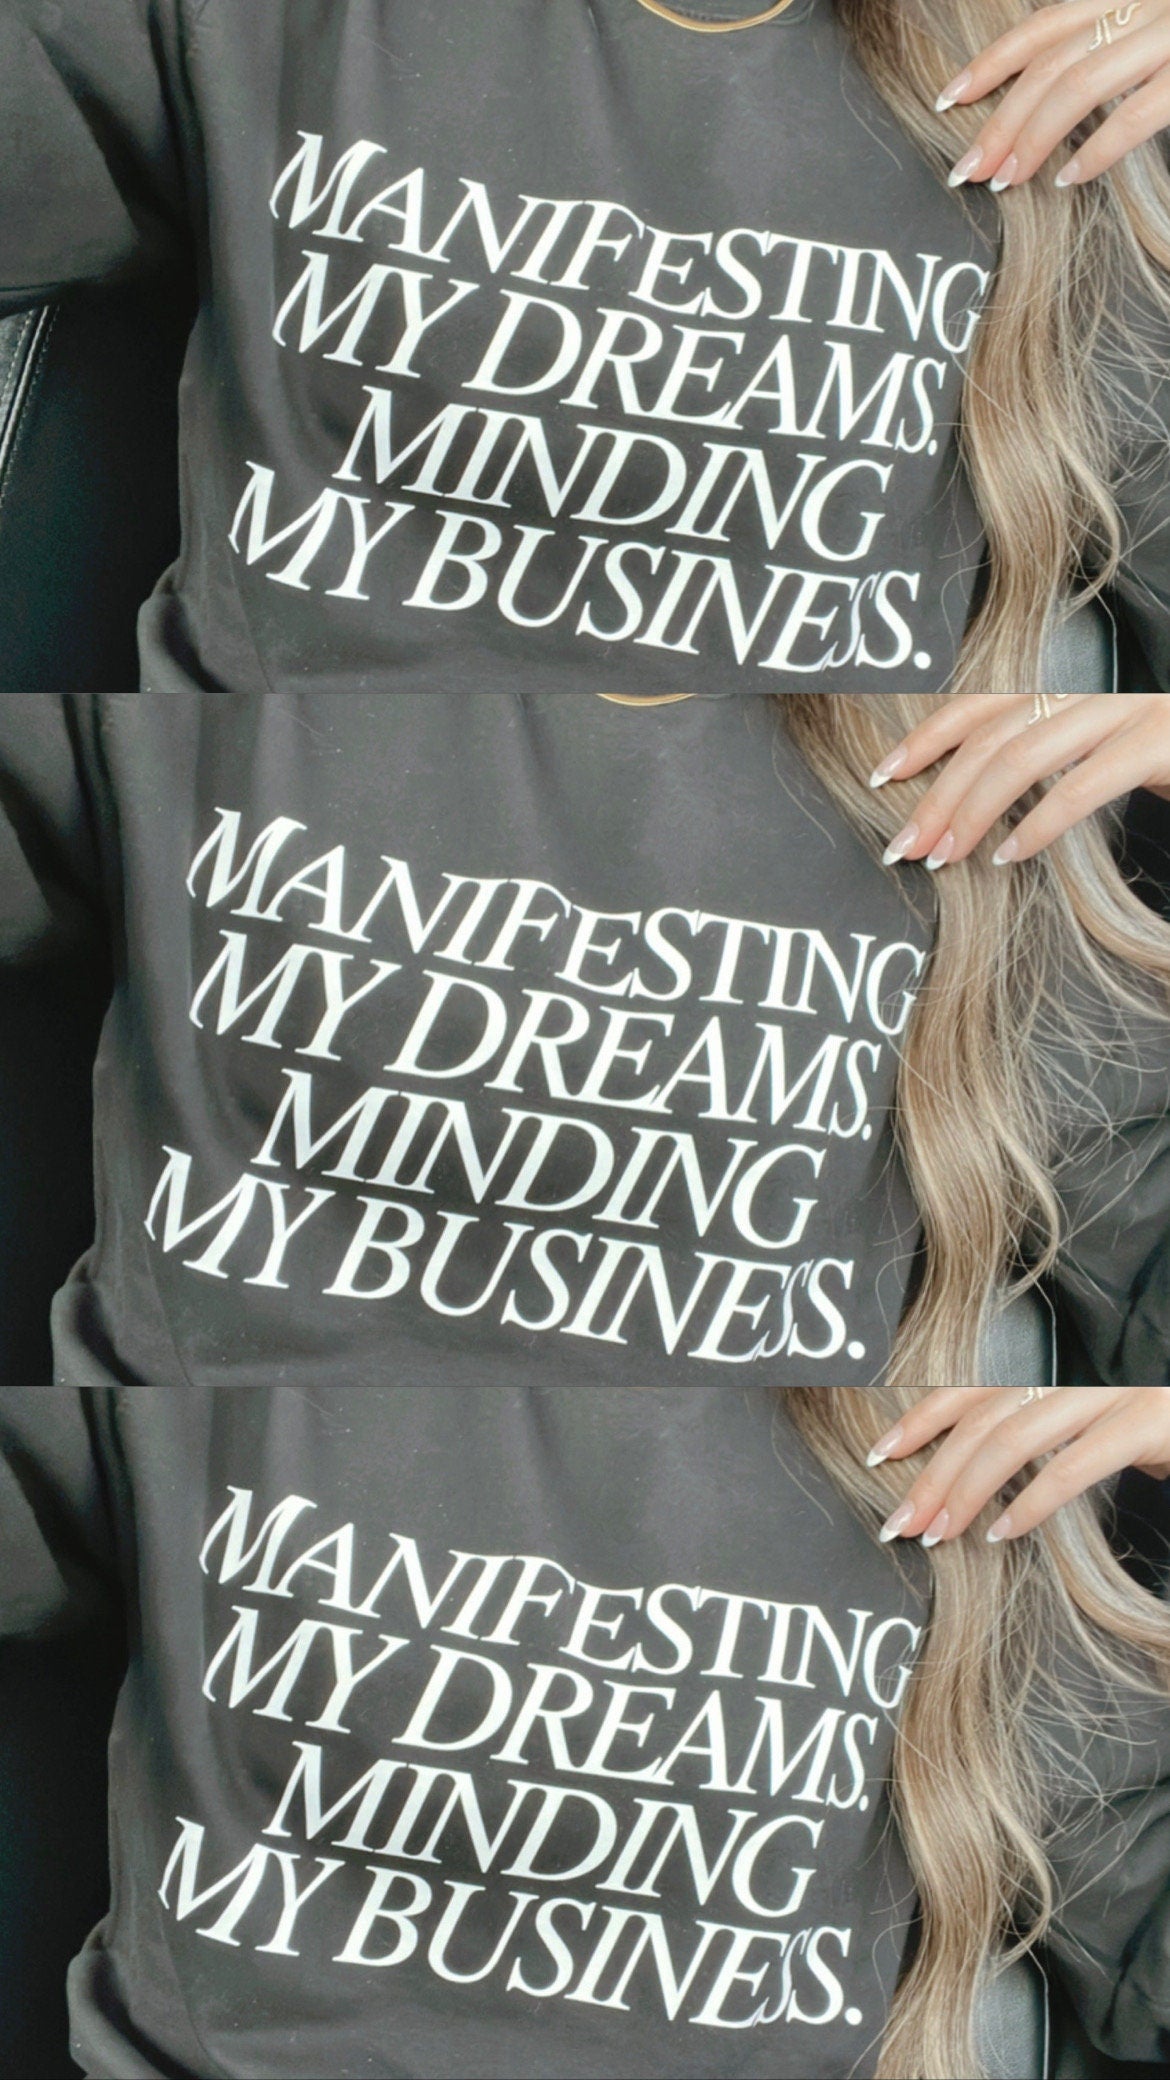 Manifesting My Dreams Minding My Business Crewneck, Graphic Sweatshirt, Women's Crew,  Black Sweatshirt, Spiritual Apparel, Manifestation